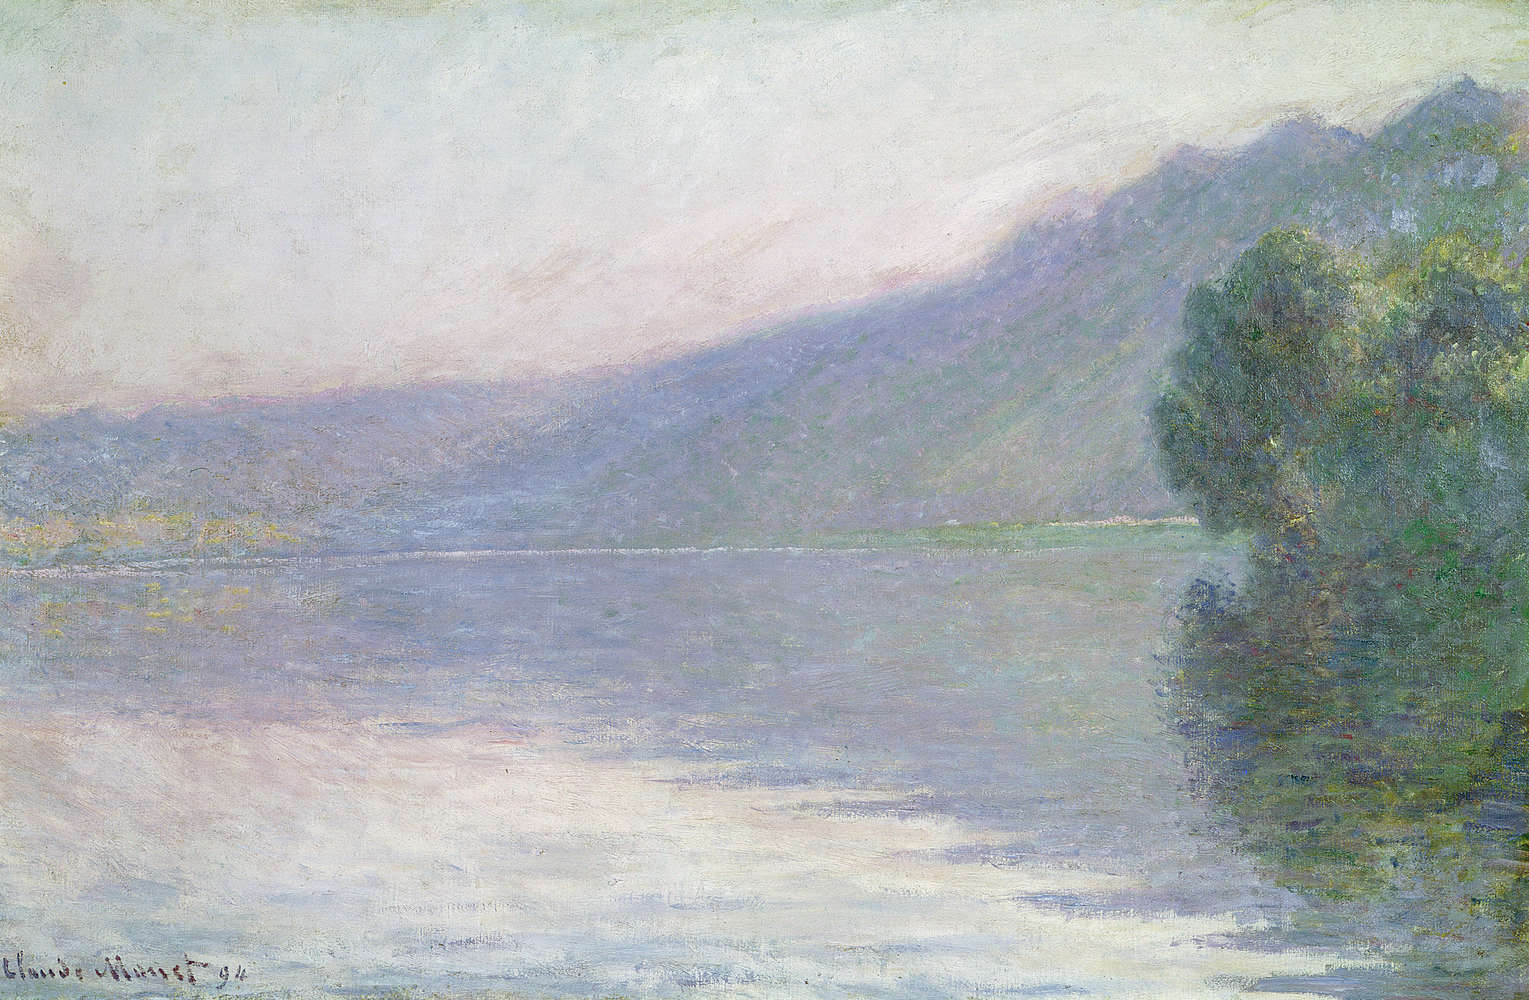             Photo wallpaper "The Seine at PortVillez" by Claude Monet
        